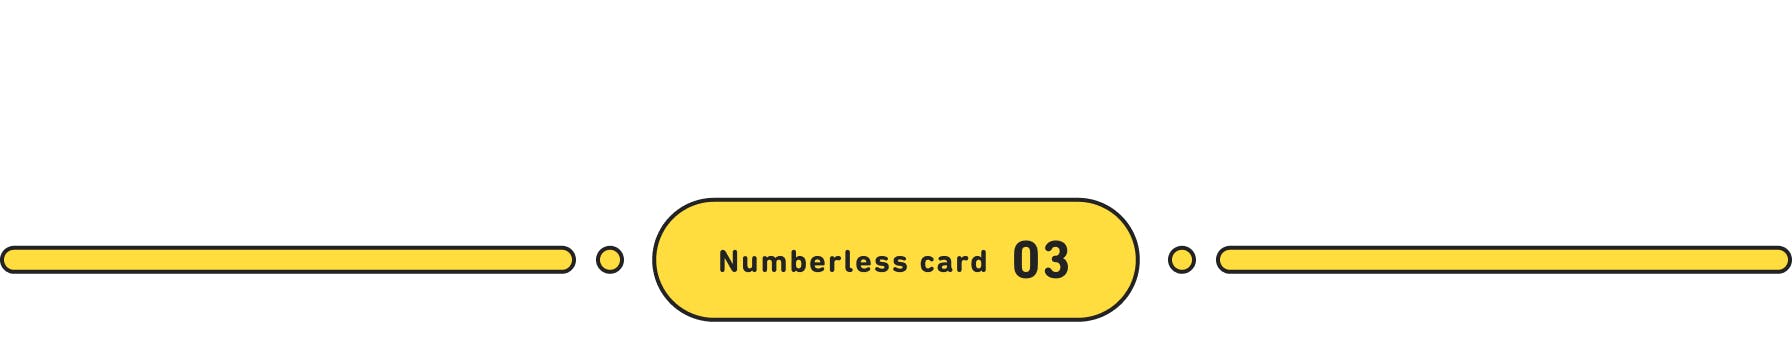 Numberless card 03